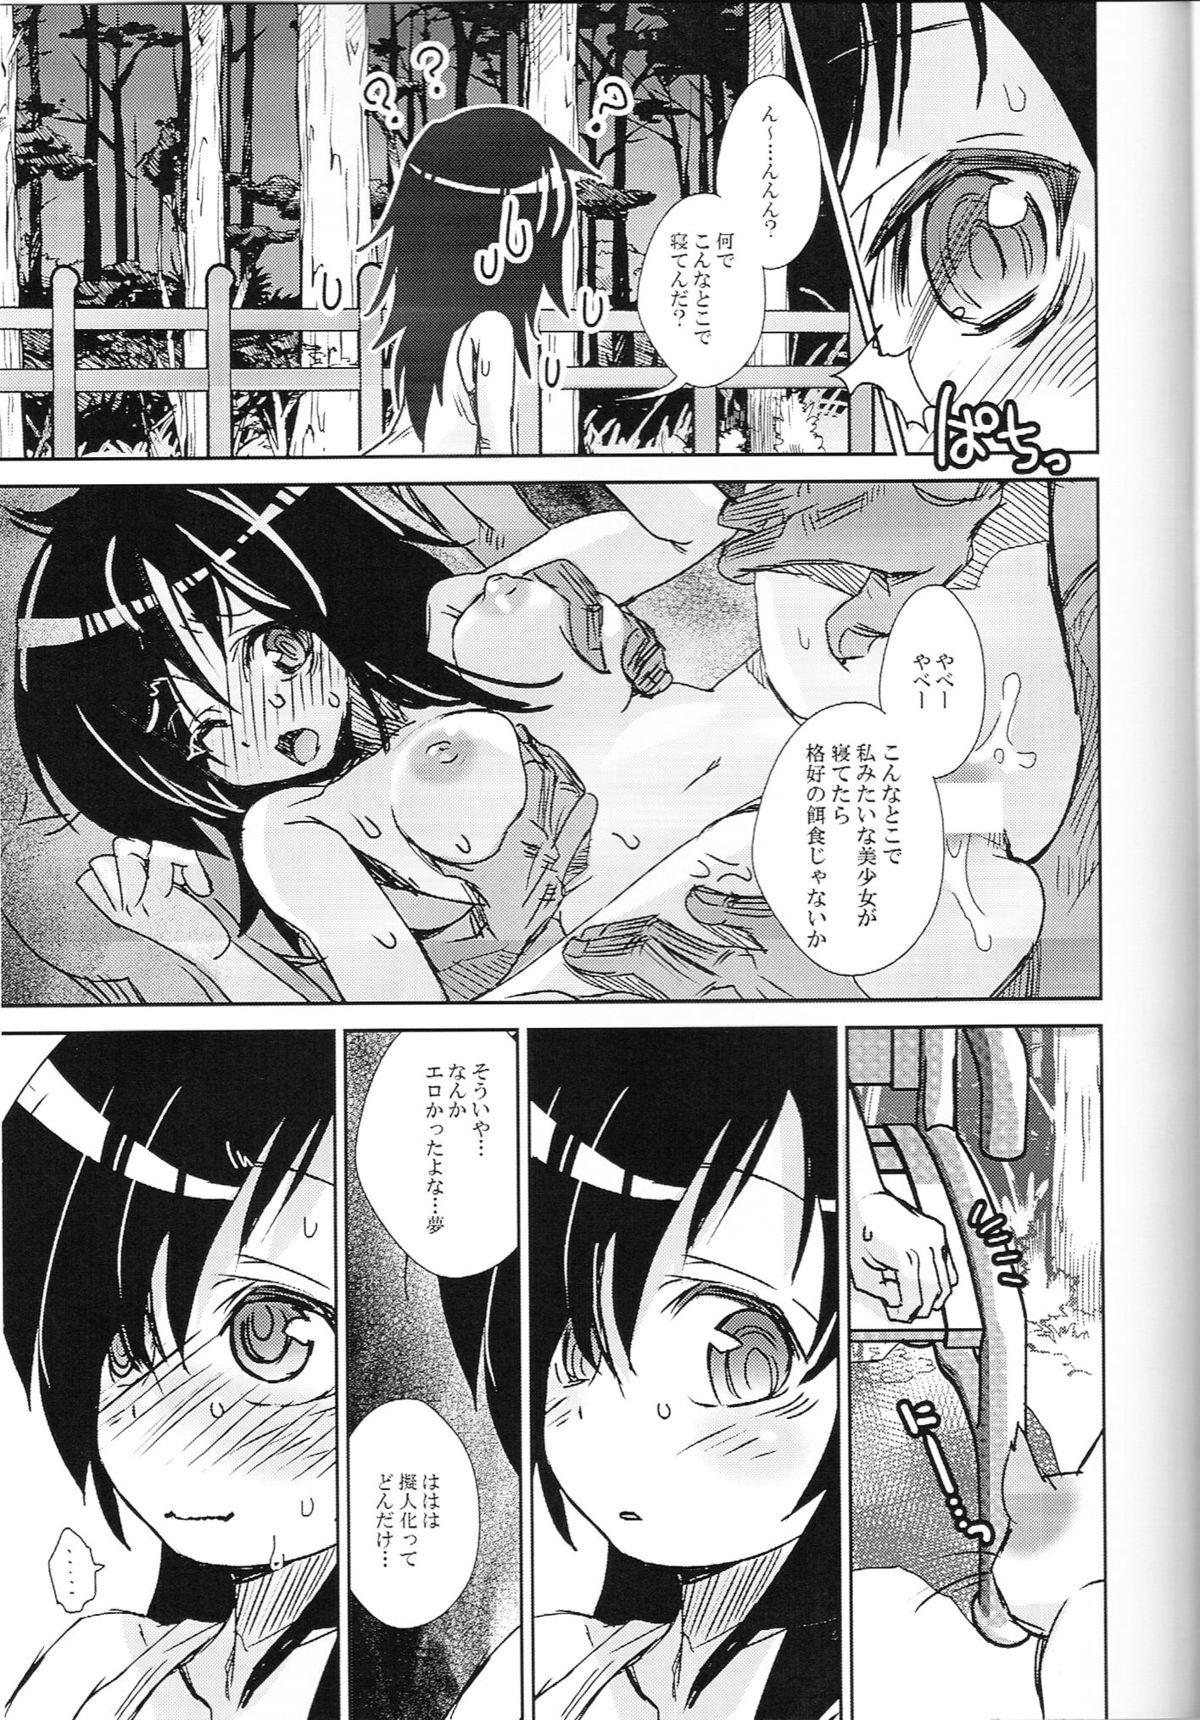 Ikillitts Watashi ga Moteru noha Neko ni dake! - Its not my fault that im not popular Machine - Page 12